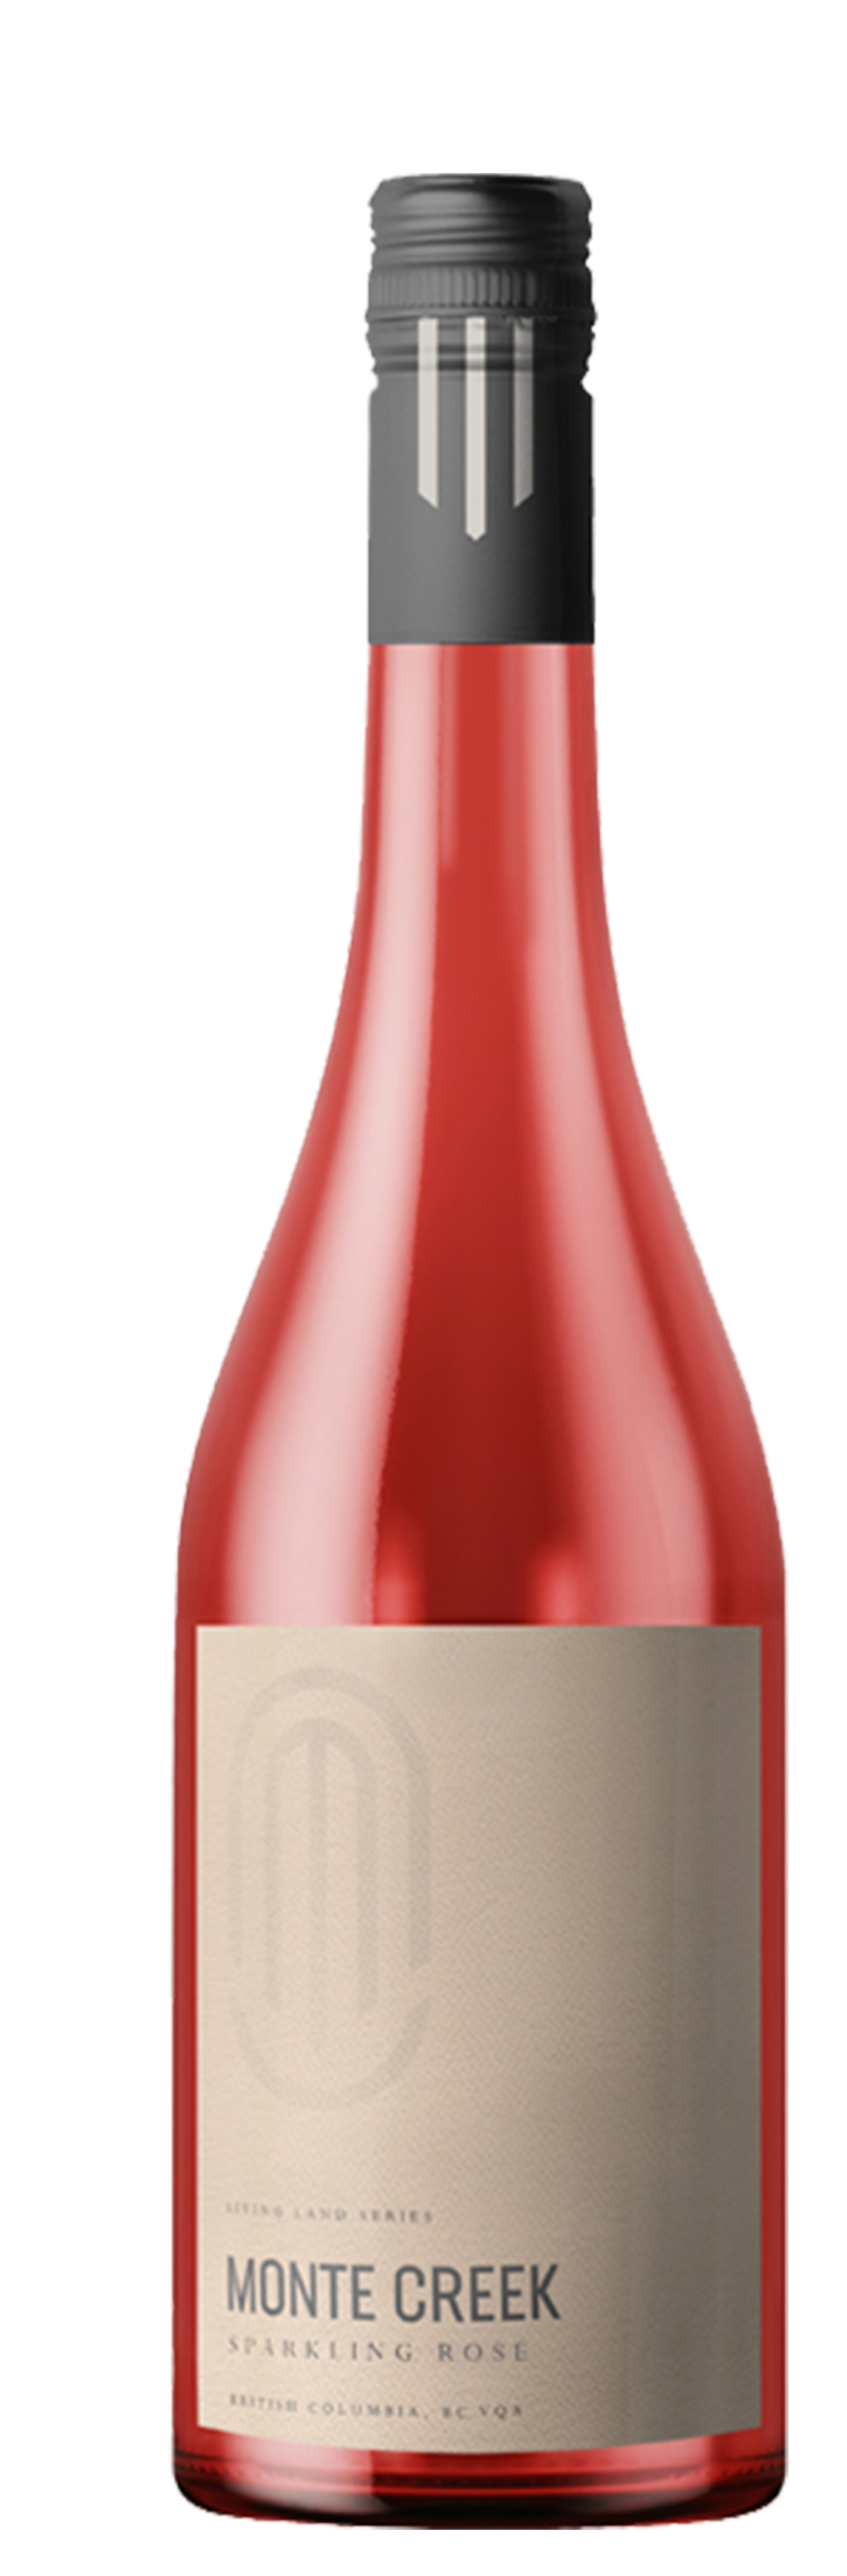 Monte Creek Winery Sparkling Rose